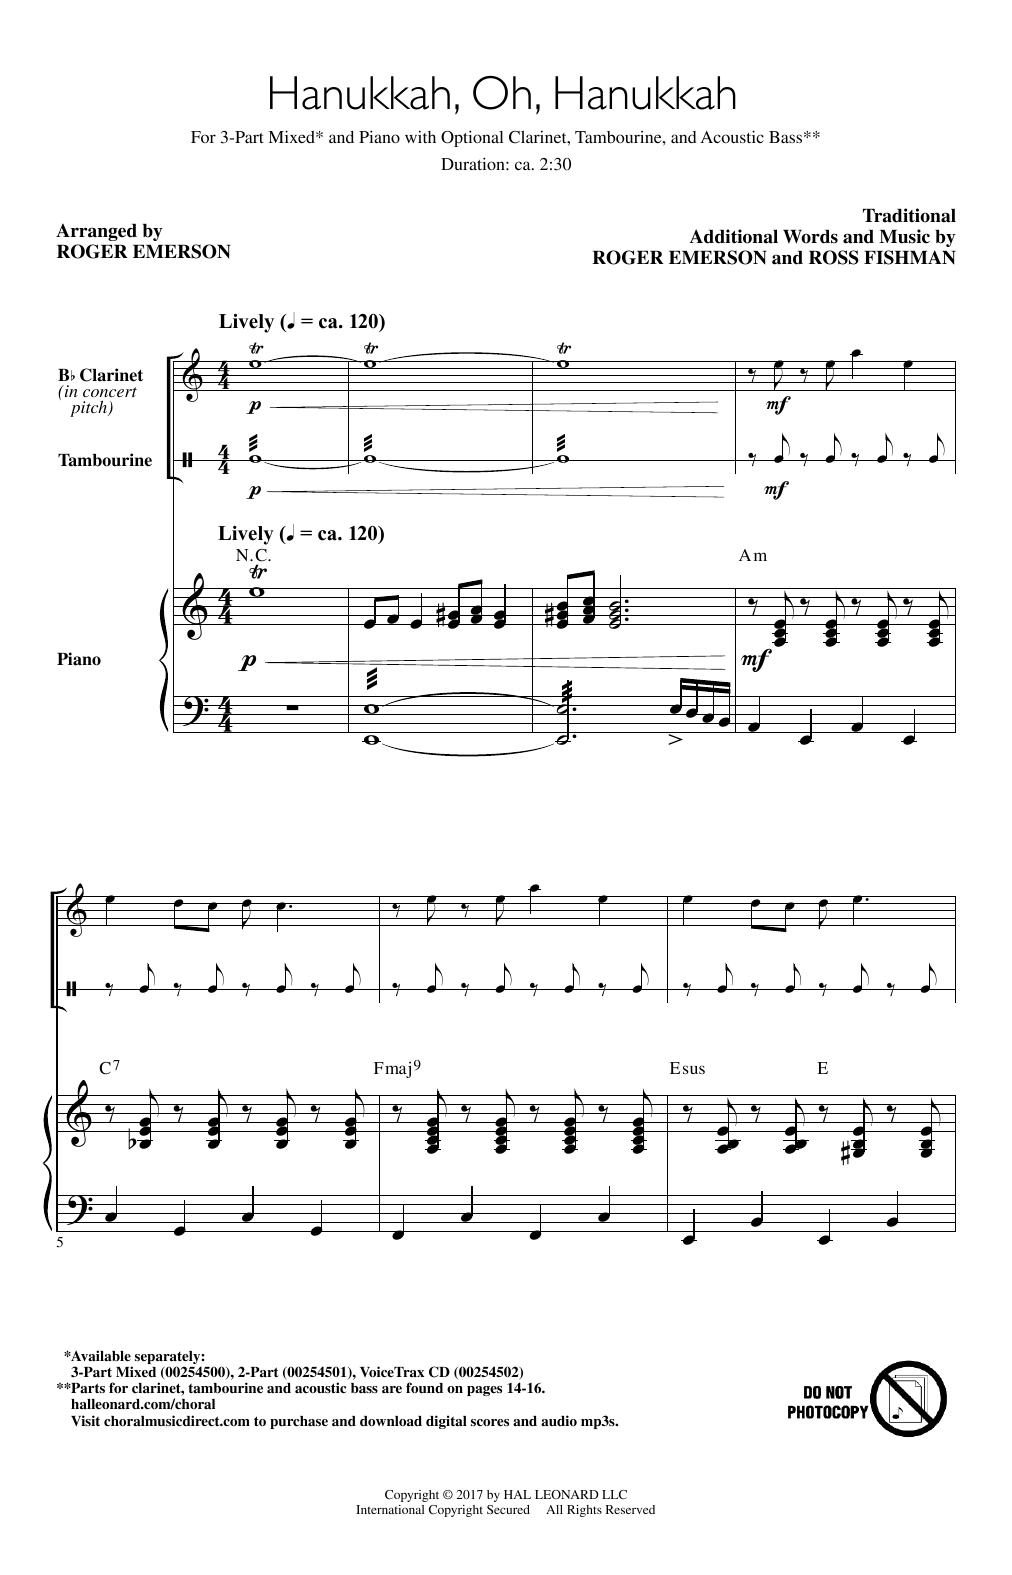 Roger Emerson Hanukkah, Oh, Hanukkah Sheet Music Notes & Chords for 2-Part Choir - Download or Print PDF